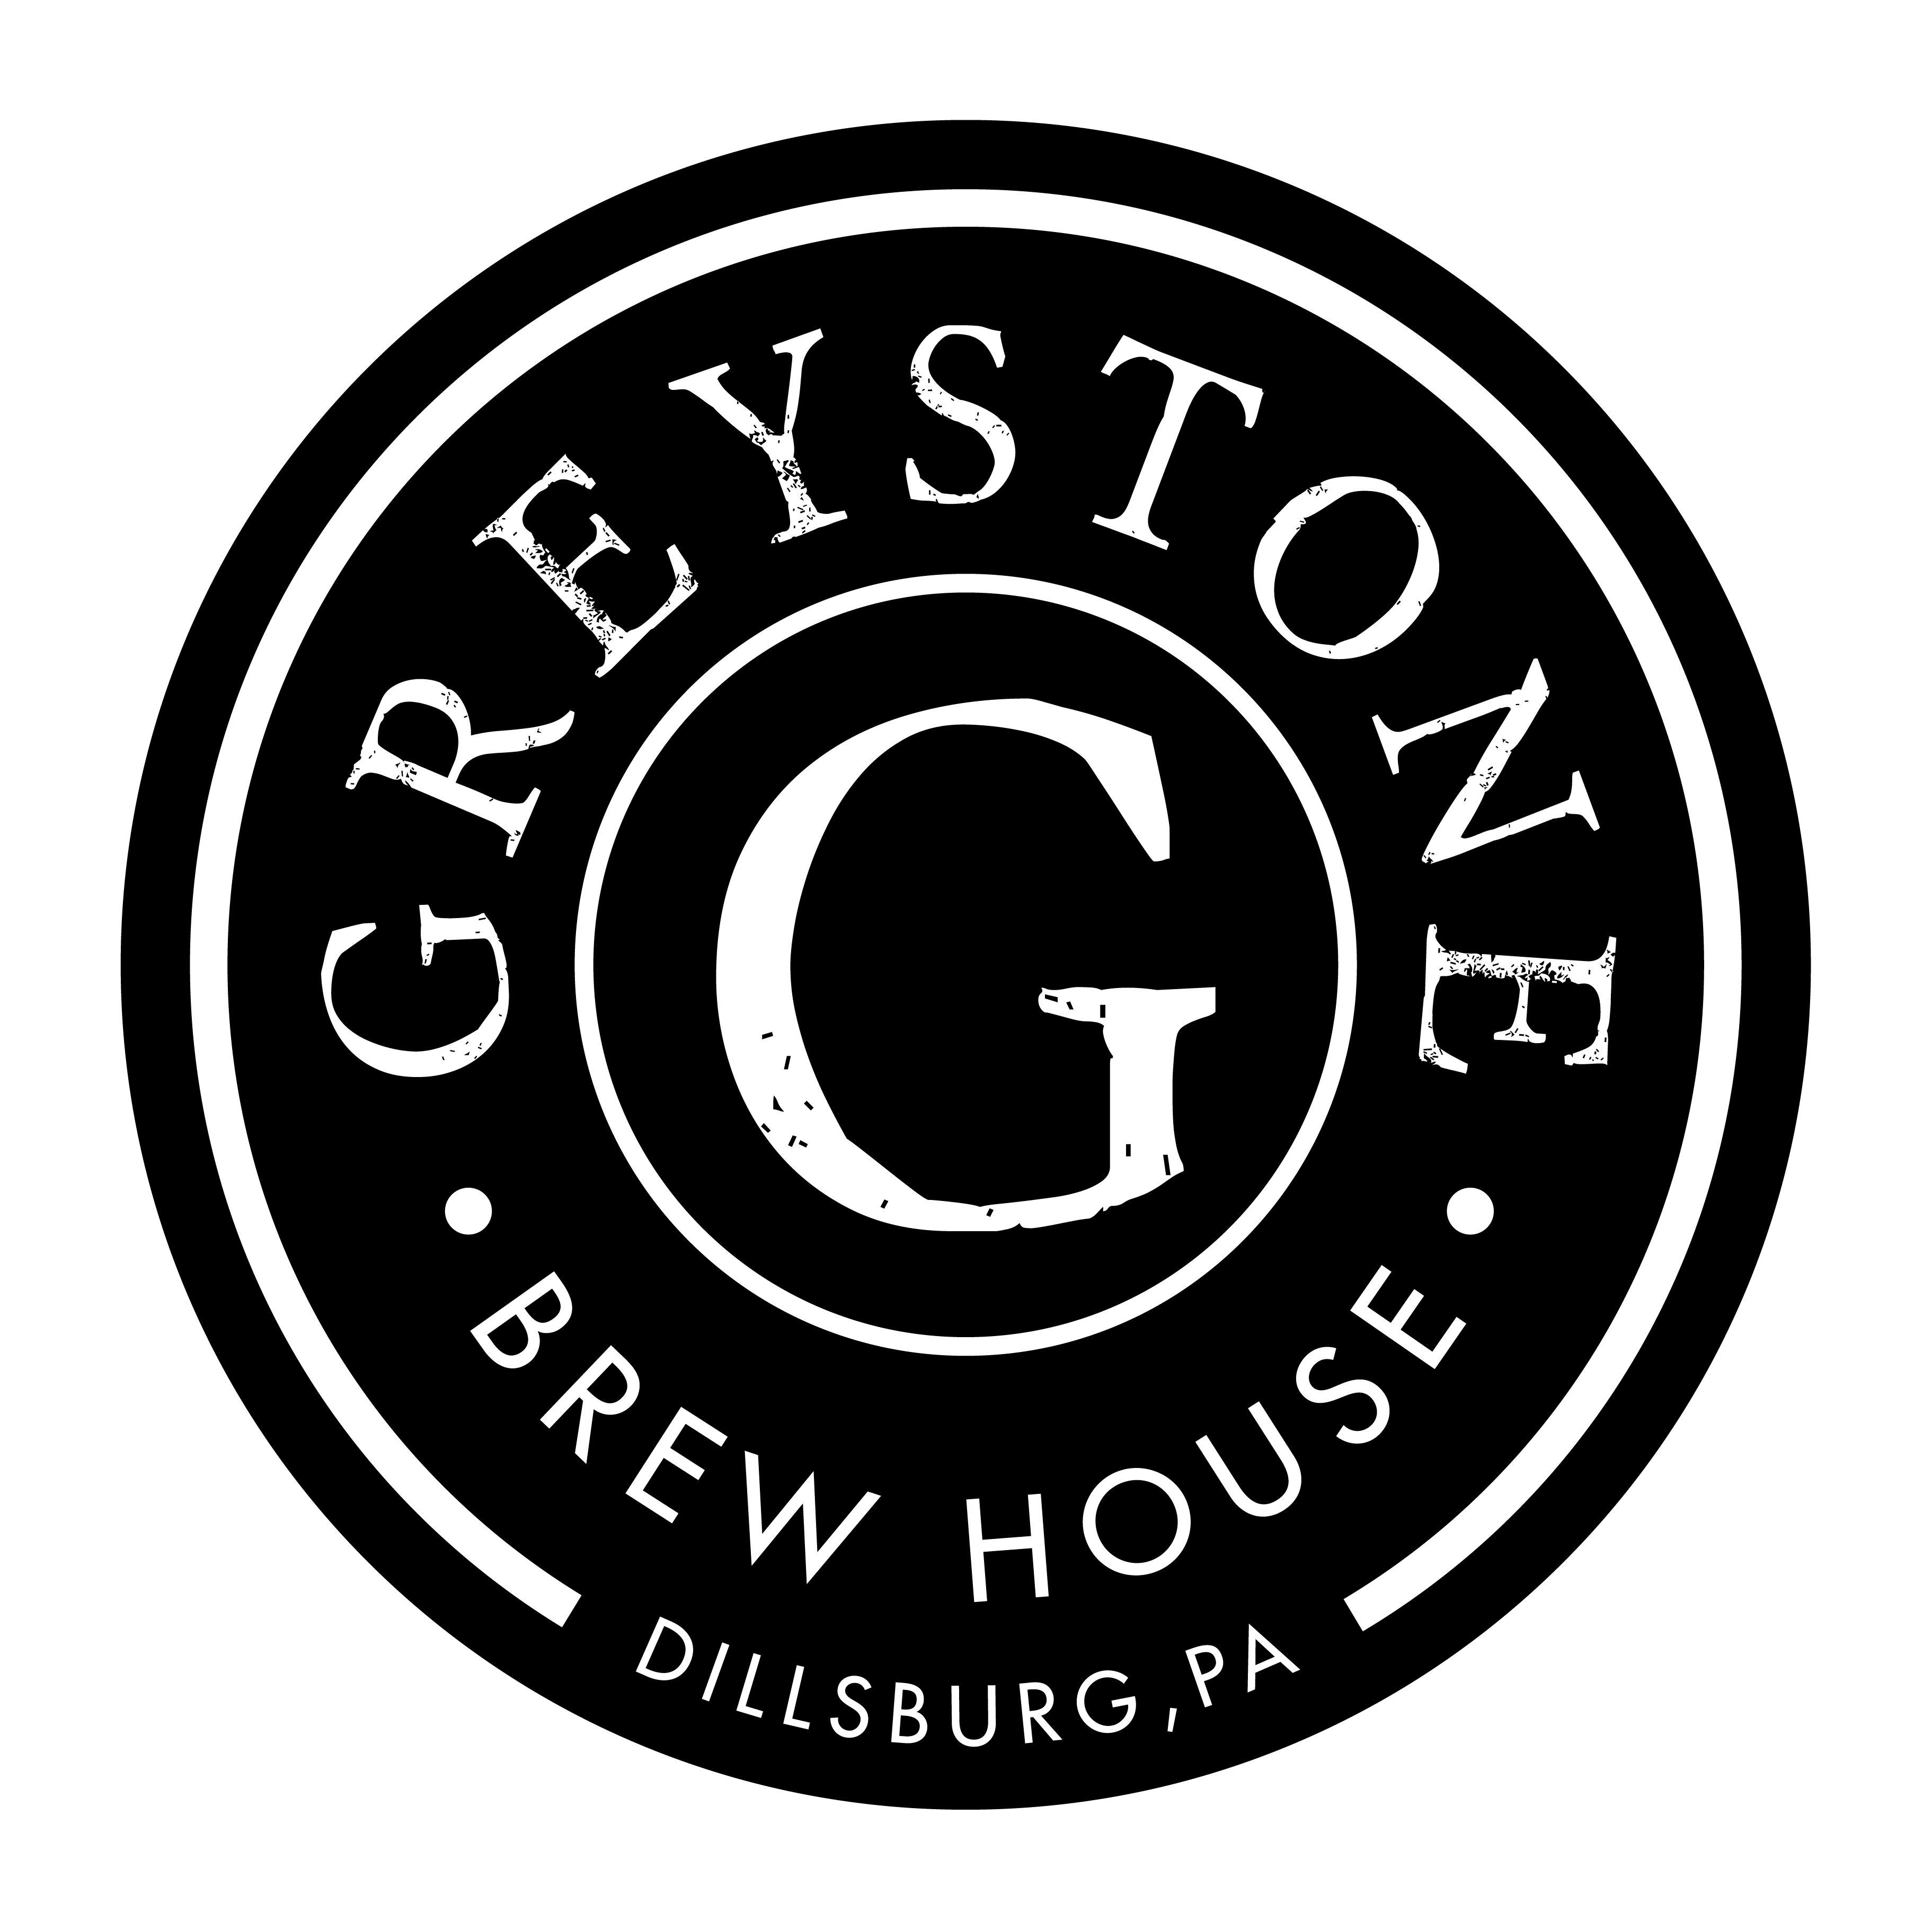 Greystone Brew House